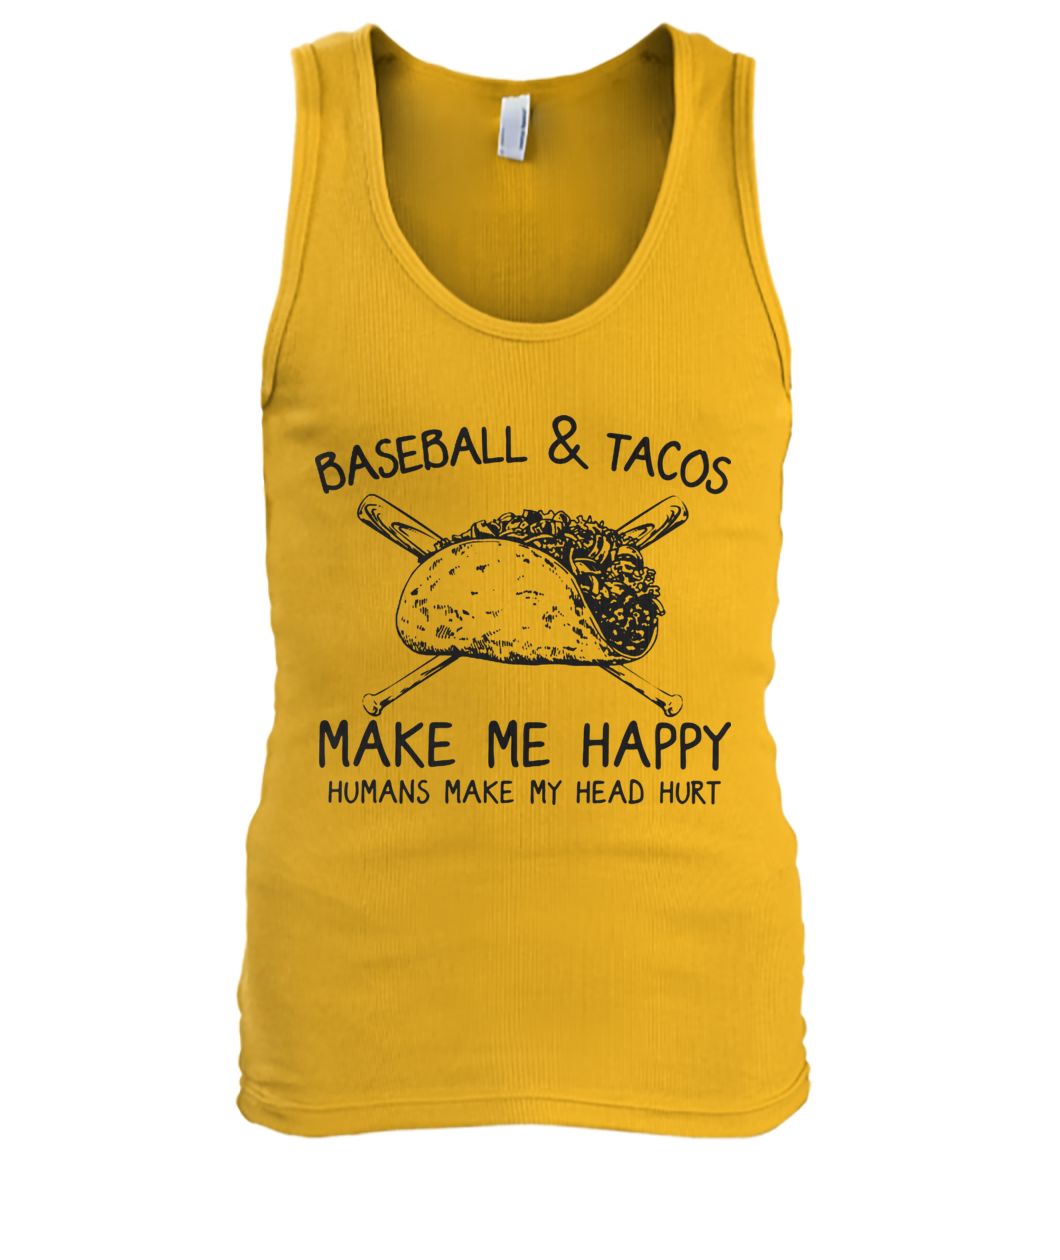 Baseball and tacos make me happy humans make my head hurt tank top